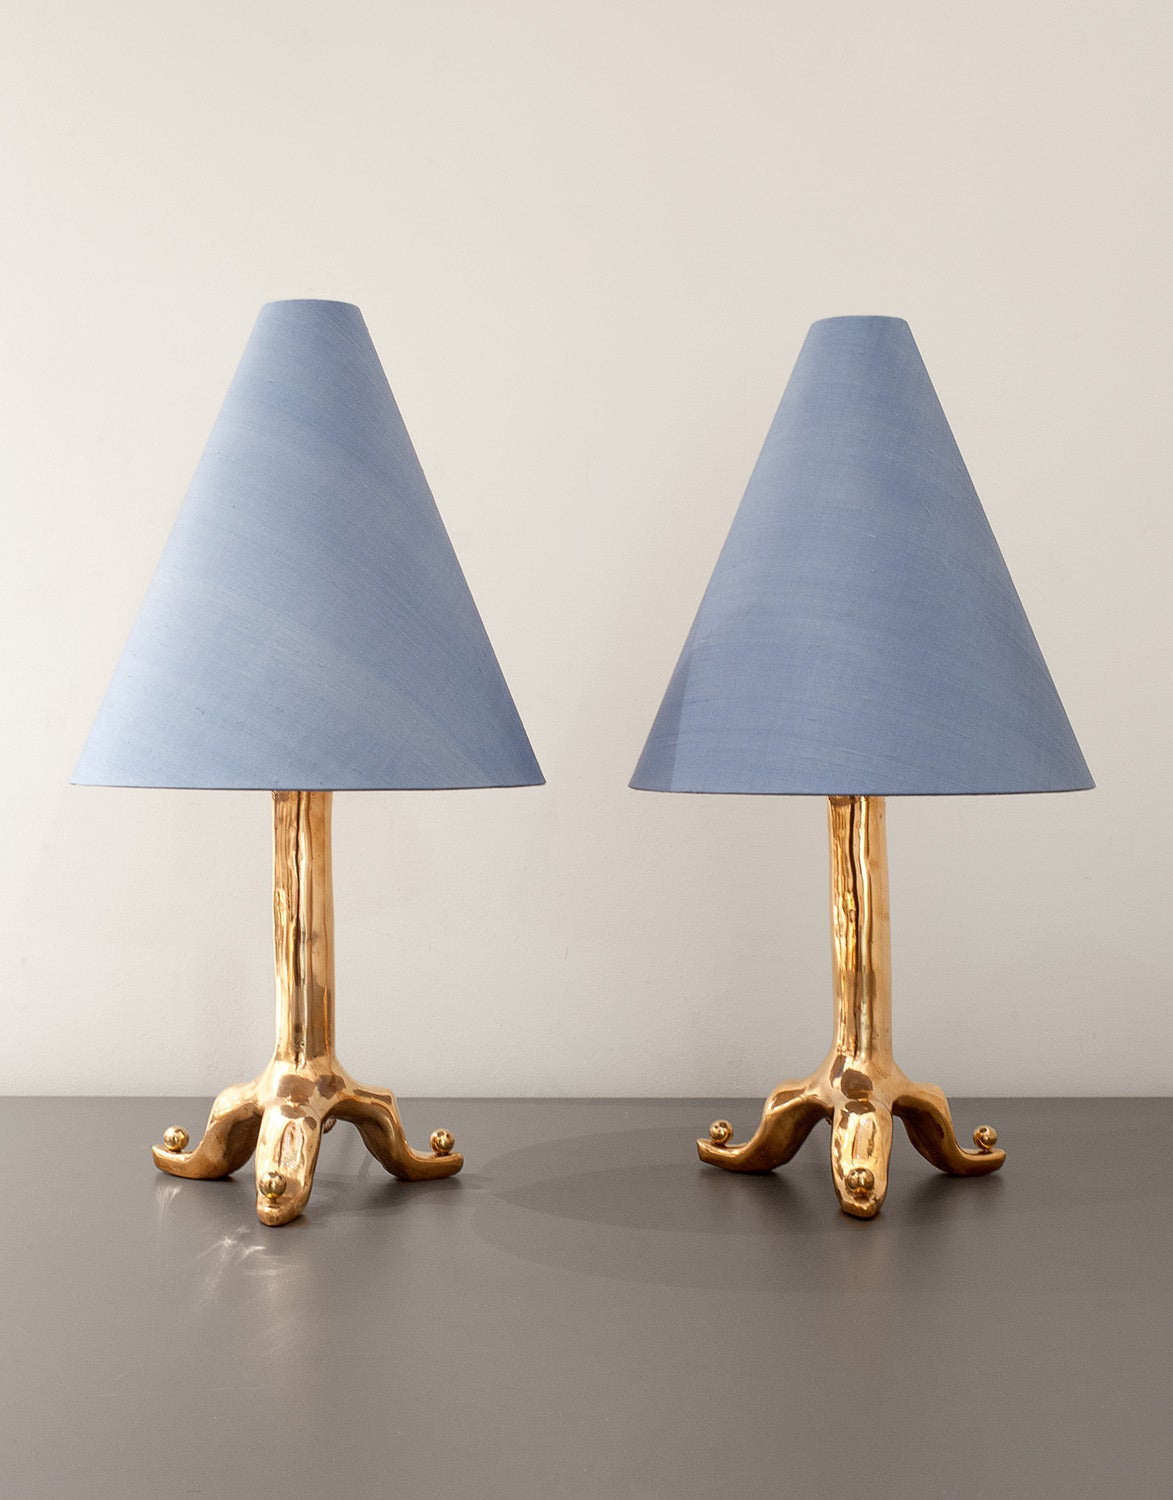 Garouste & Bonetti  
Pair of Table Lamps ‘Belgravia’
1989
Bronze, silk shade
H72 x Diam. 29 cm / H28.3 x Diam. 11.4
Editions David Gill